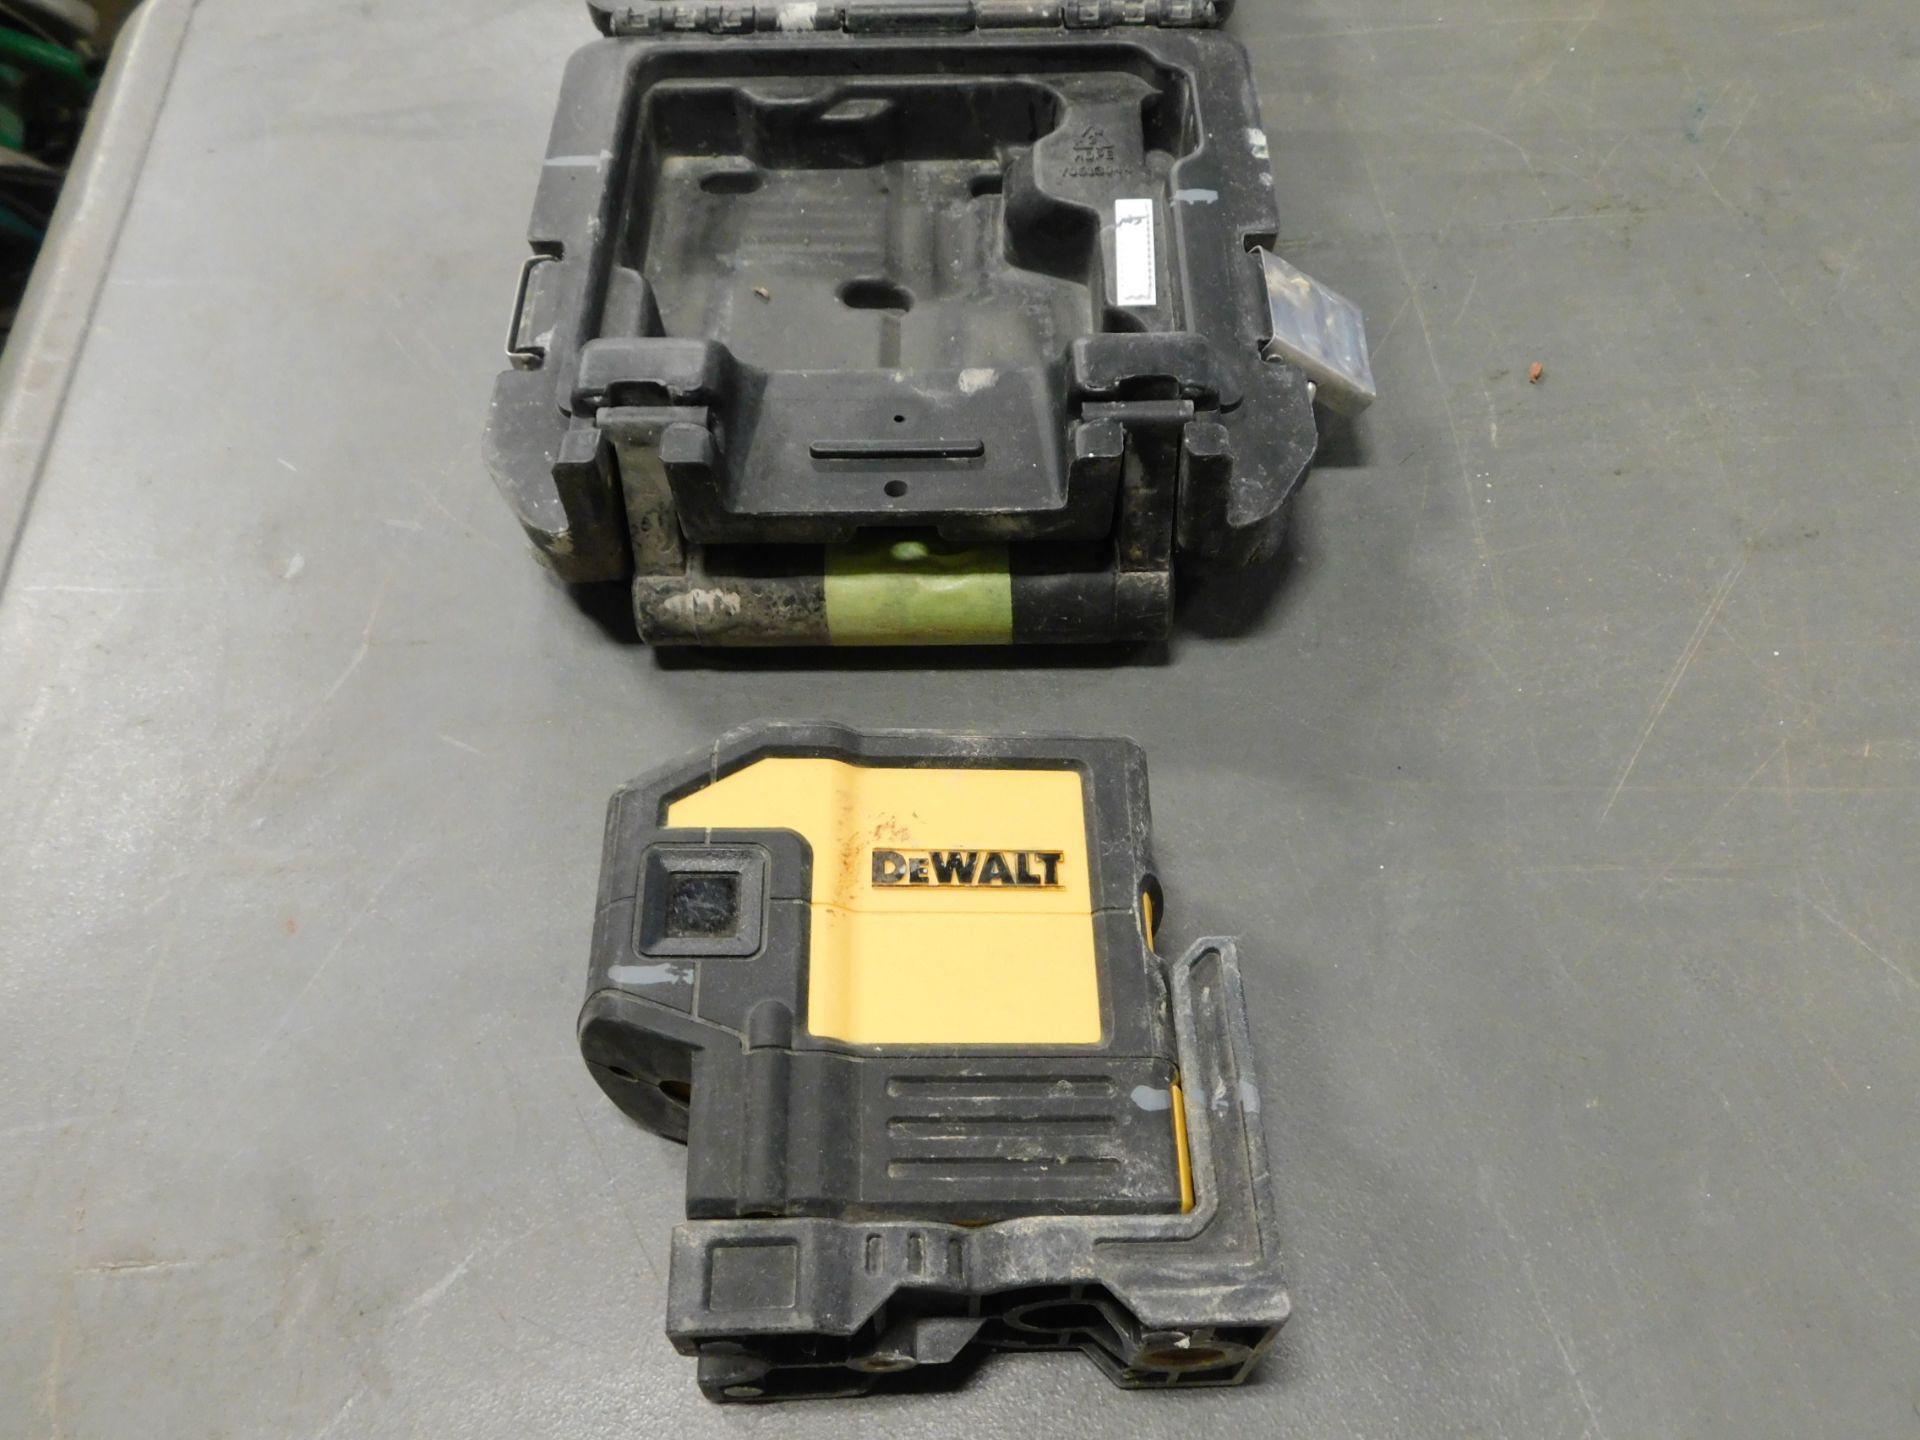 Dewalt DW0851 Combination Laser